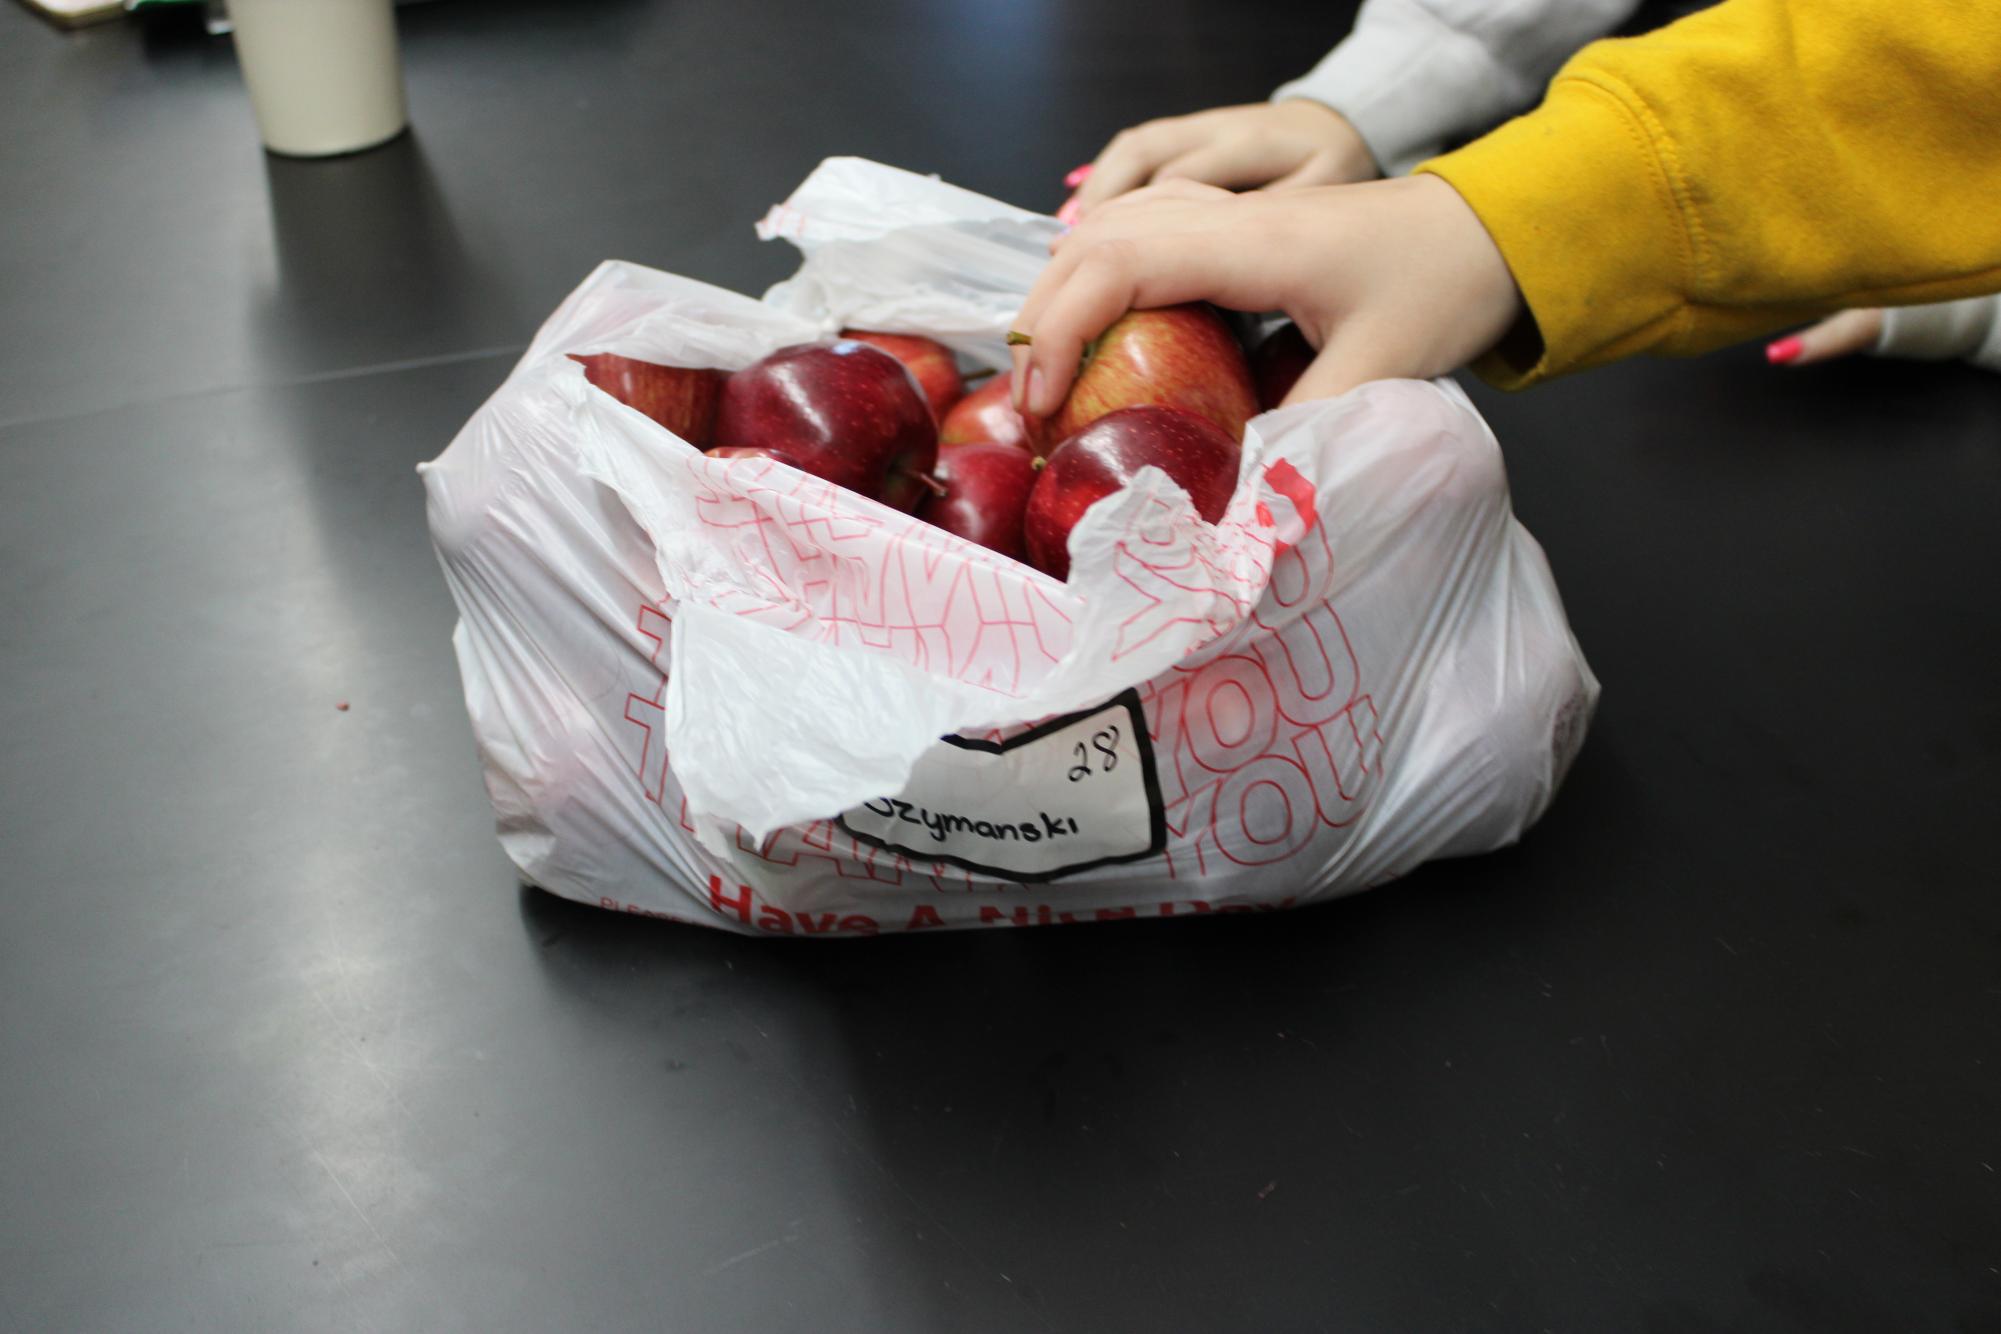 Students grabbing apples